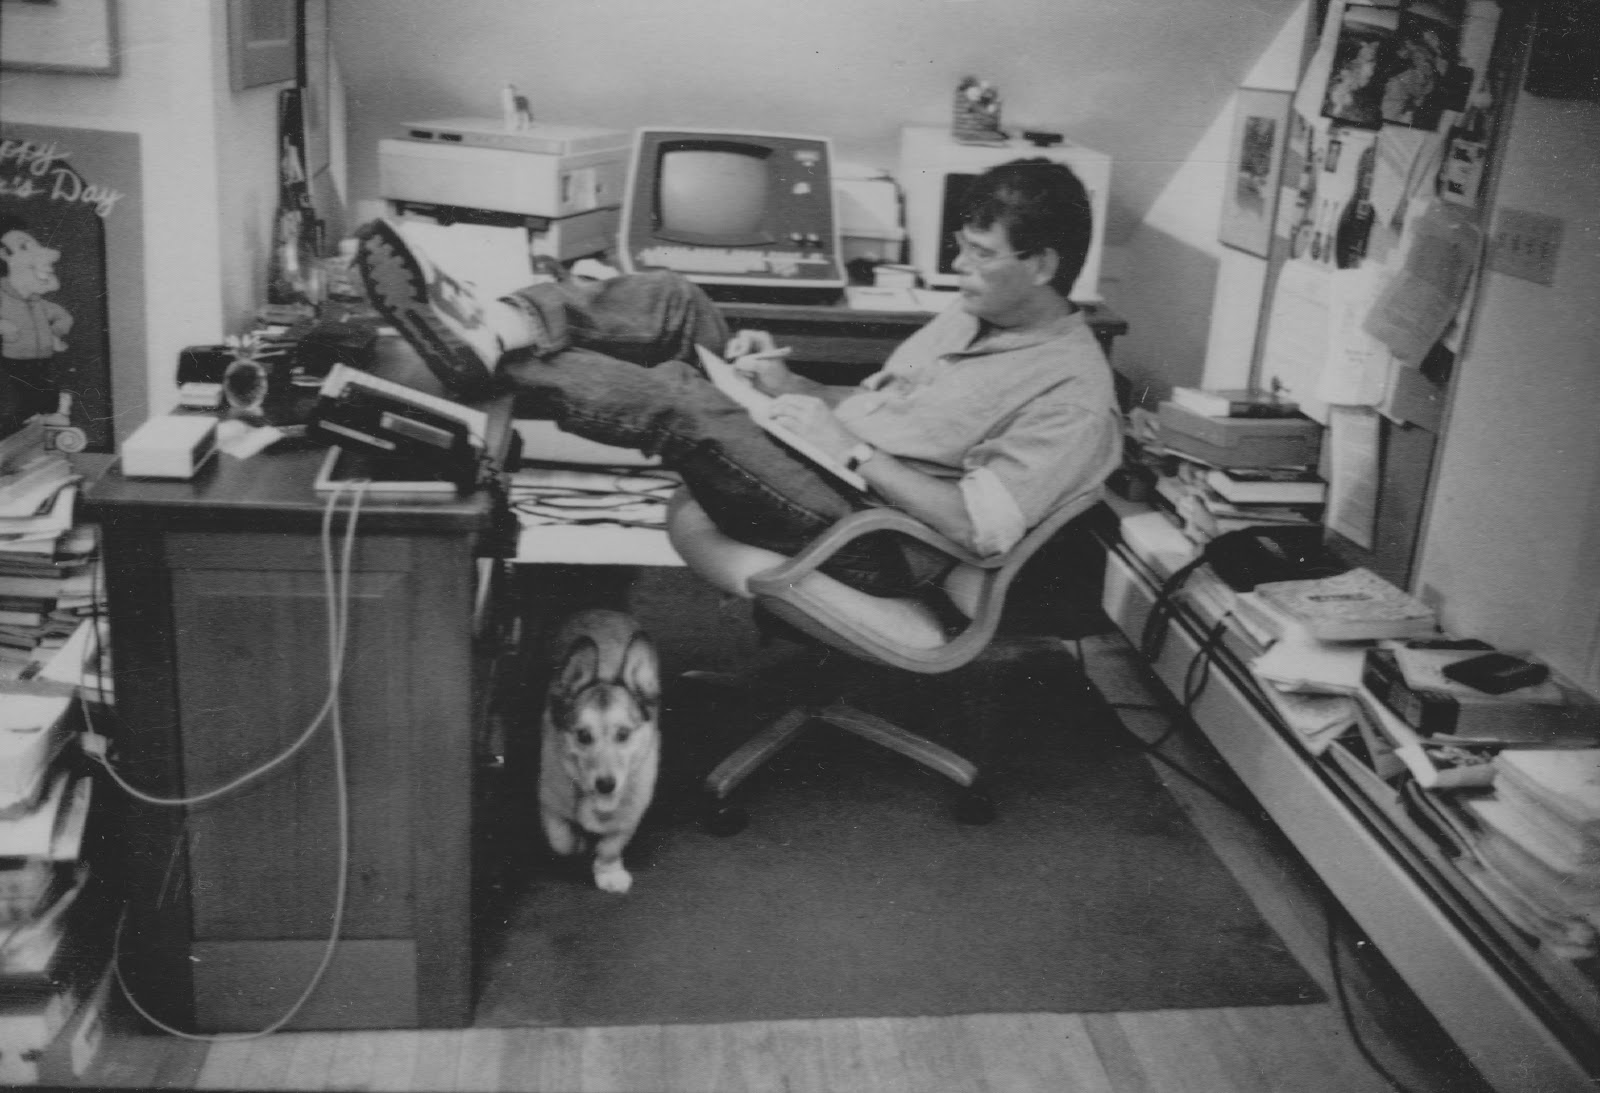 Stephen+King+working+at+desk.jpg